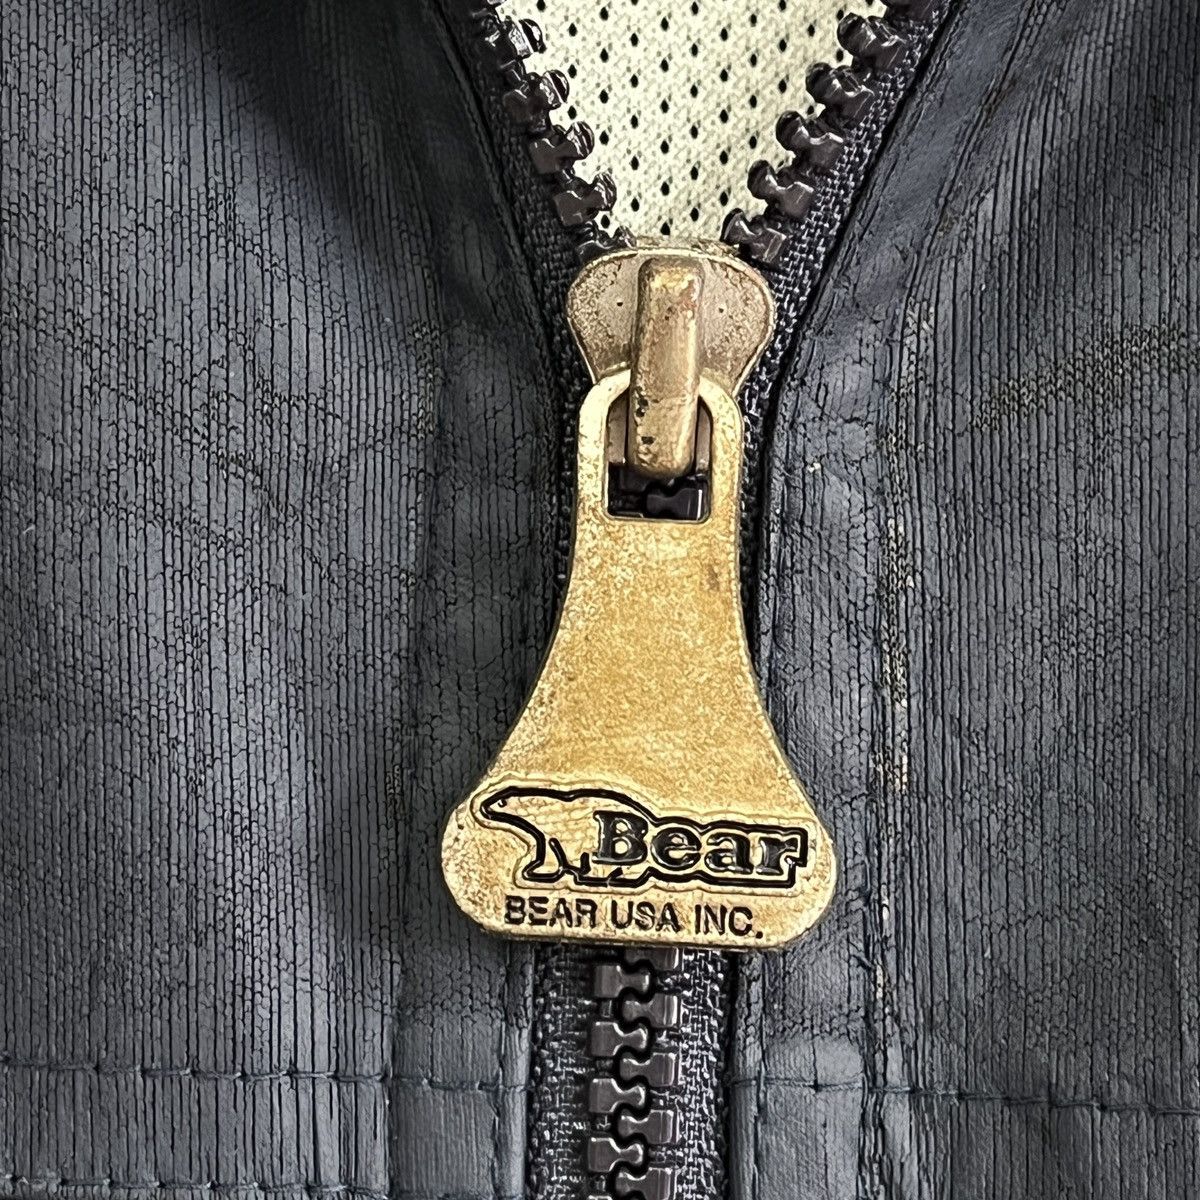 Bear USA Vintage Sweater Zipped Jacket - 4